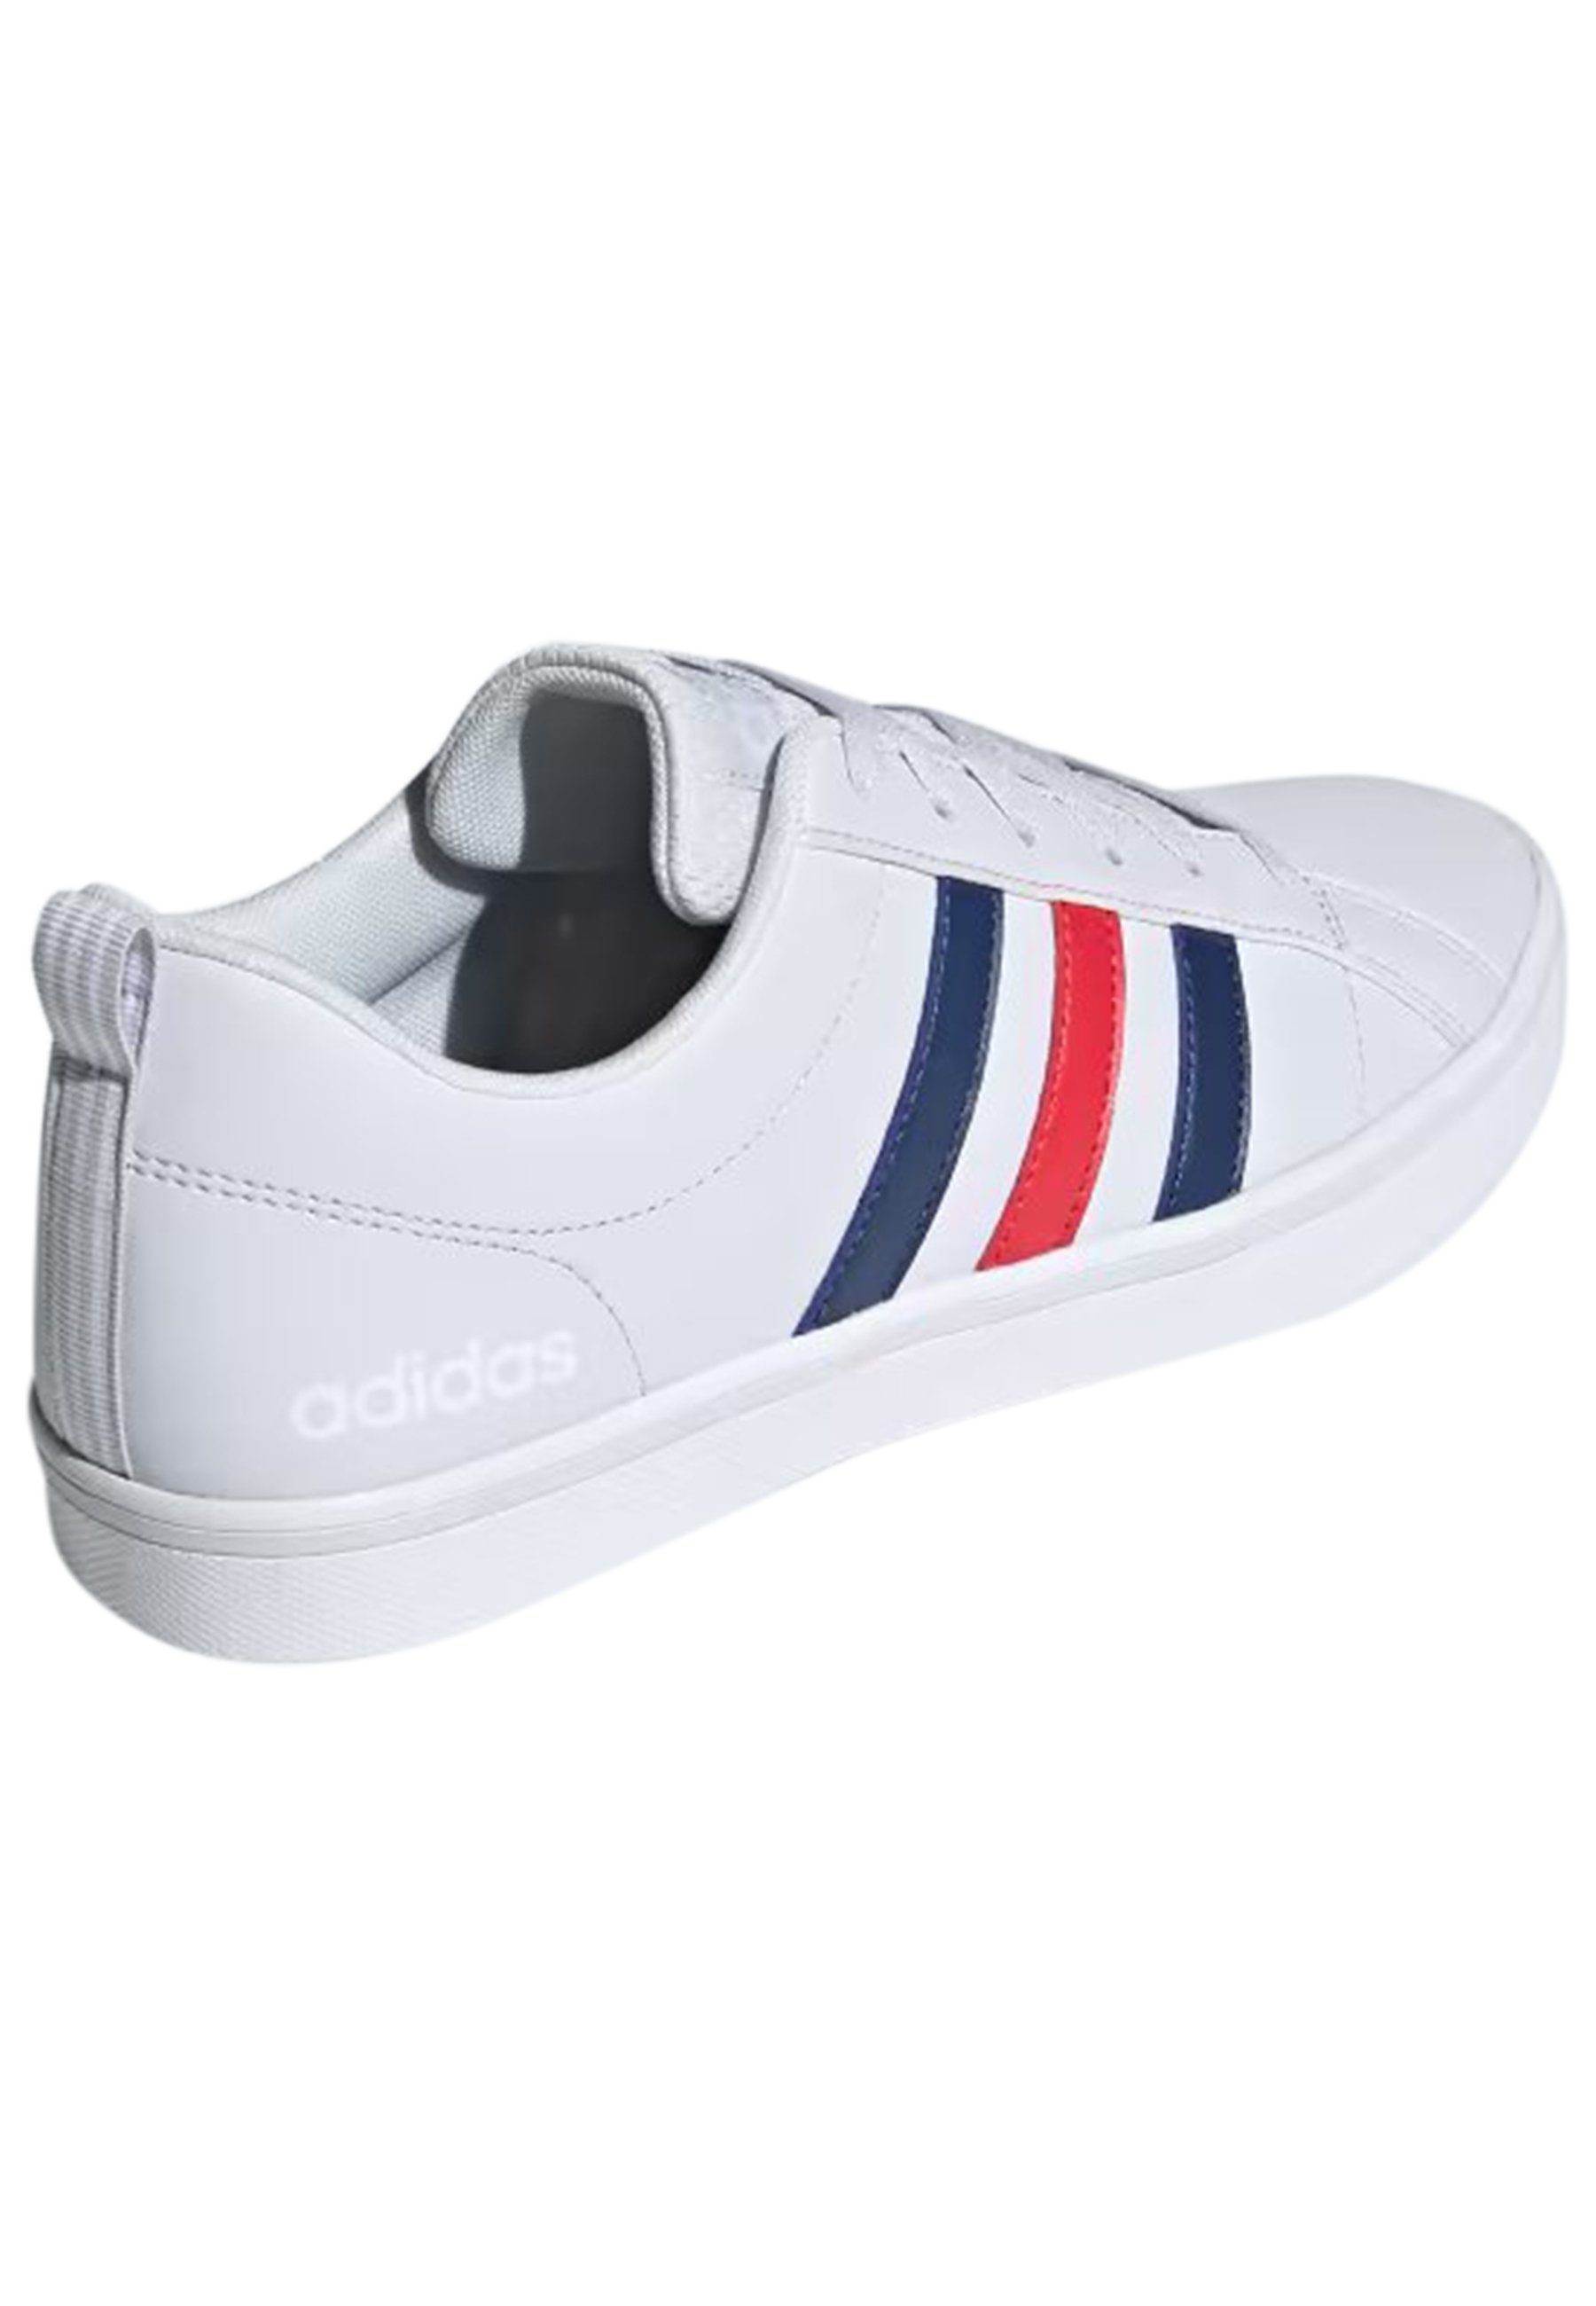 Pace Sneaker Vs adidas Originals